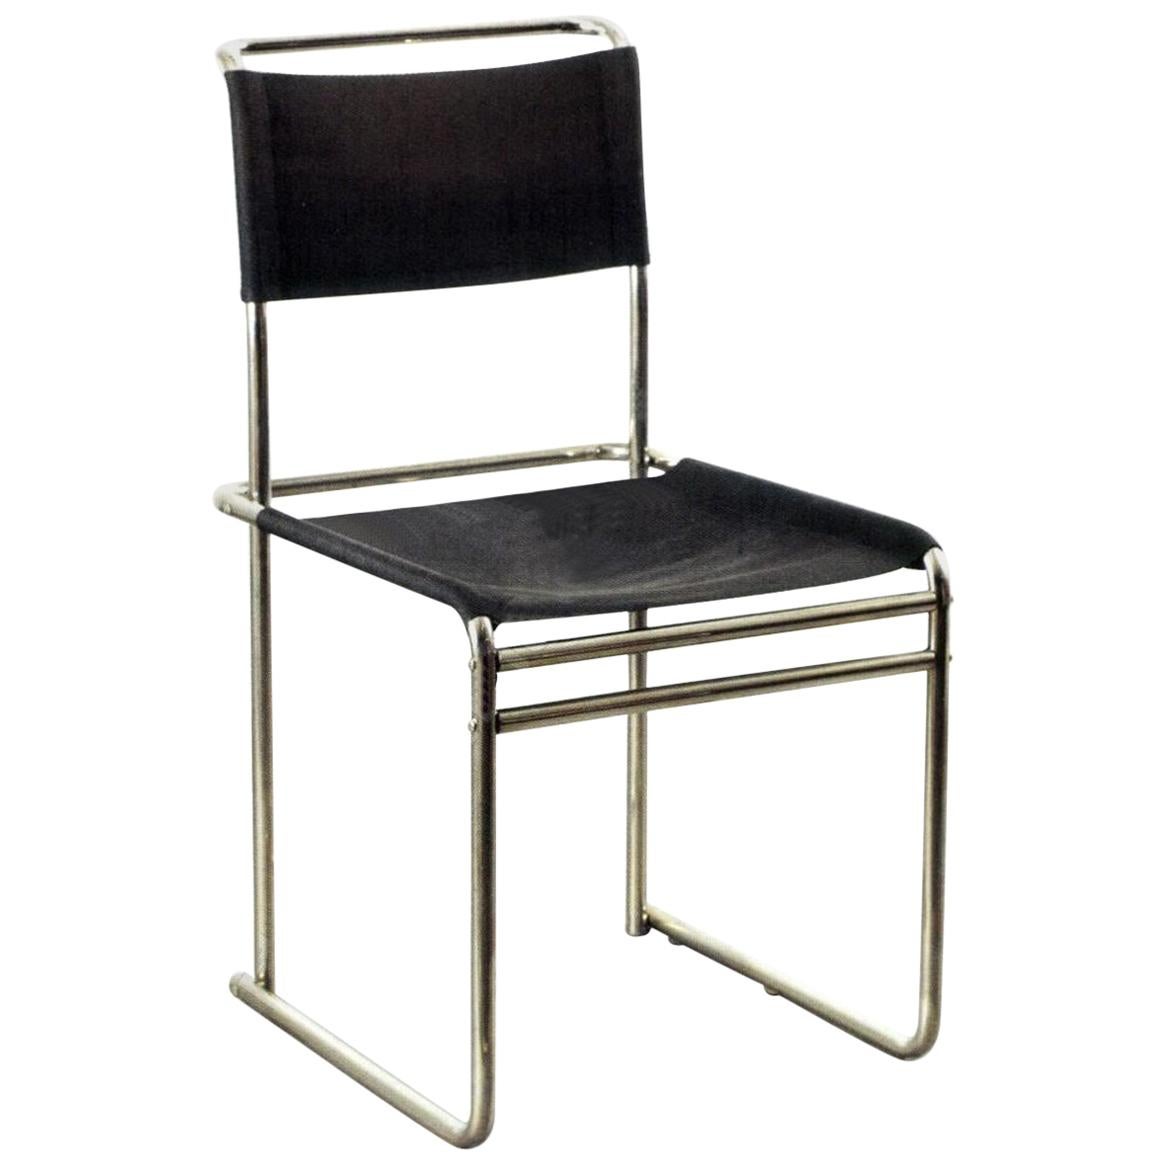 Marcel Breuer Tubular Steel Chair, 1927